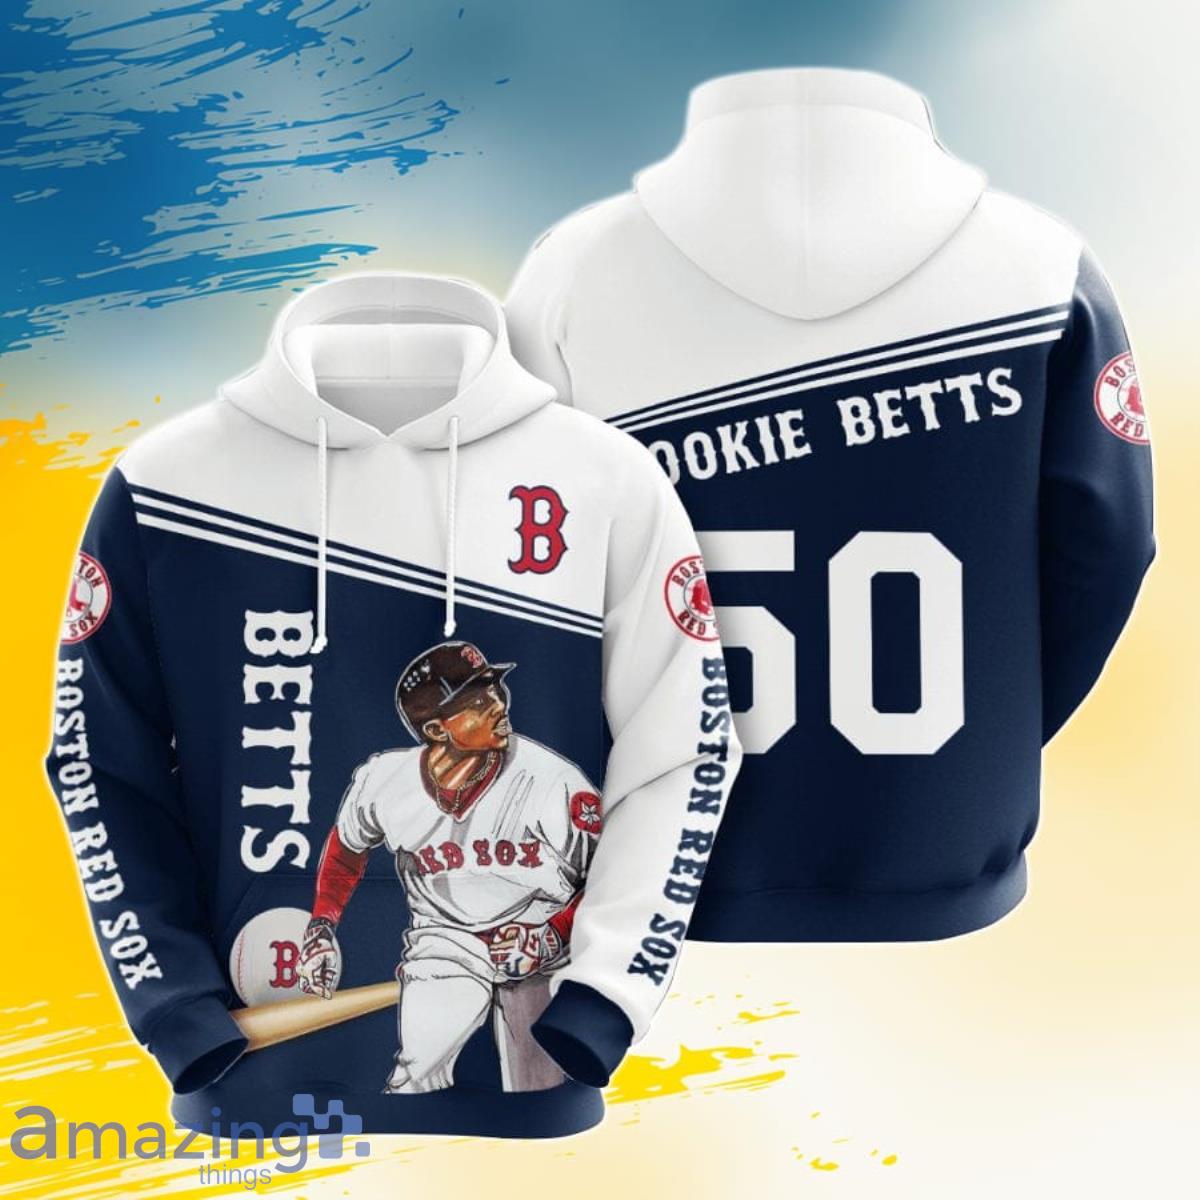 Mookie Betts Shirts, Hoodies, Boston Red Sox Shirts